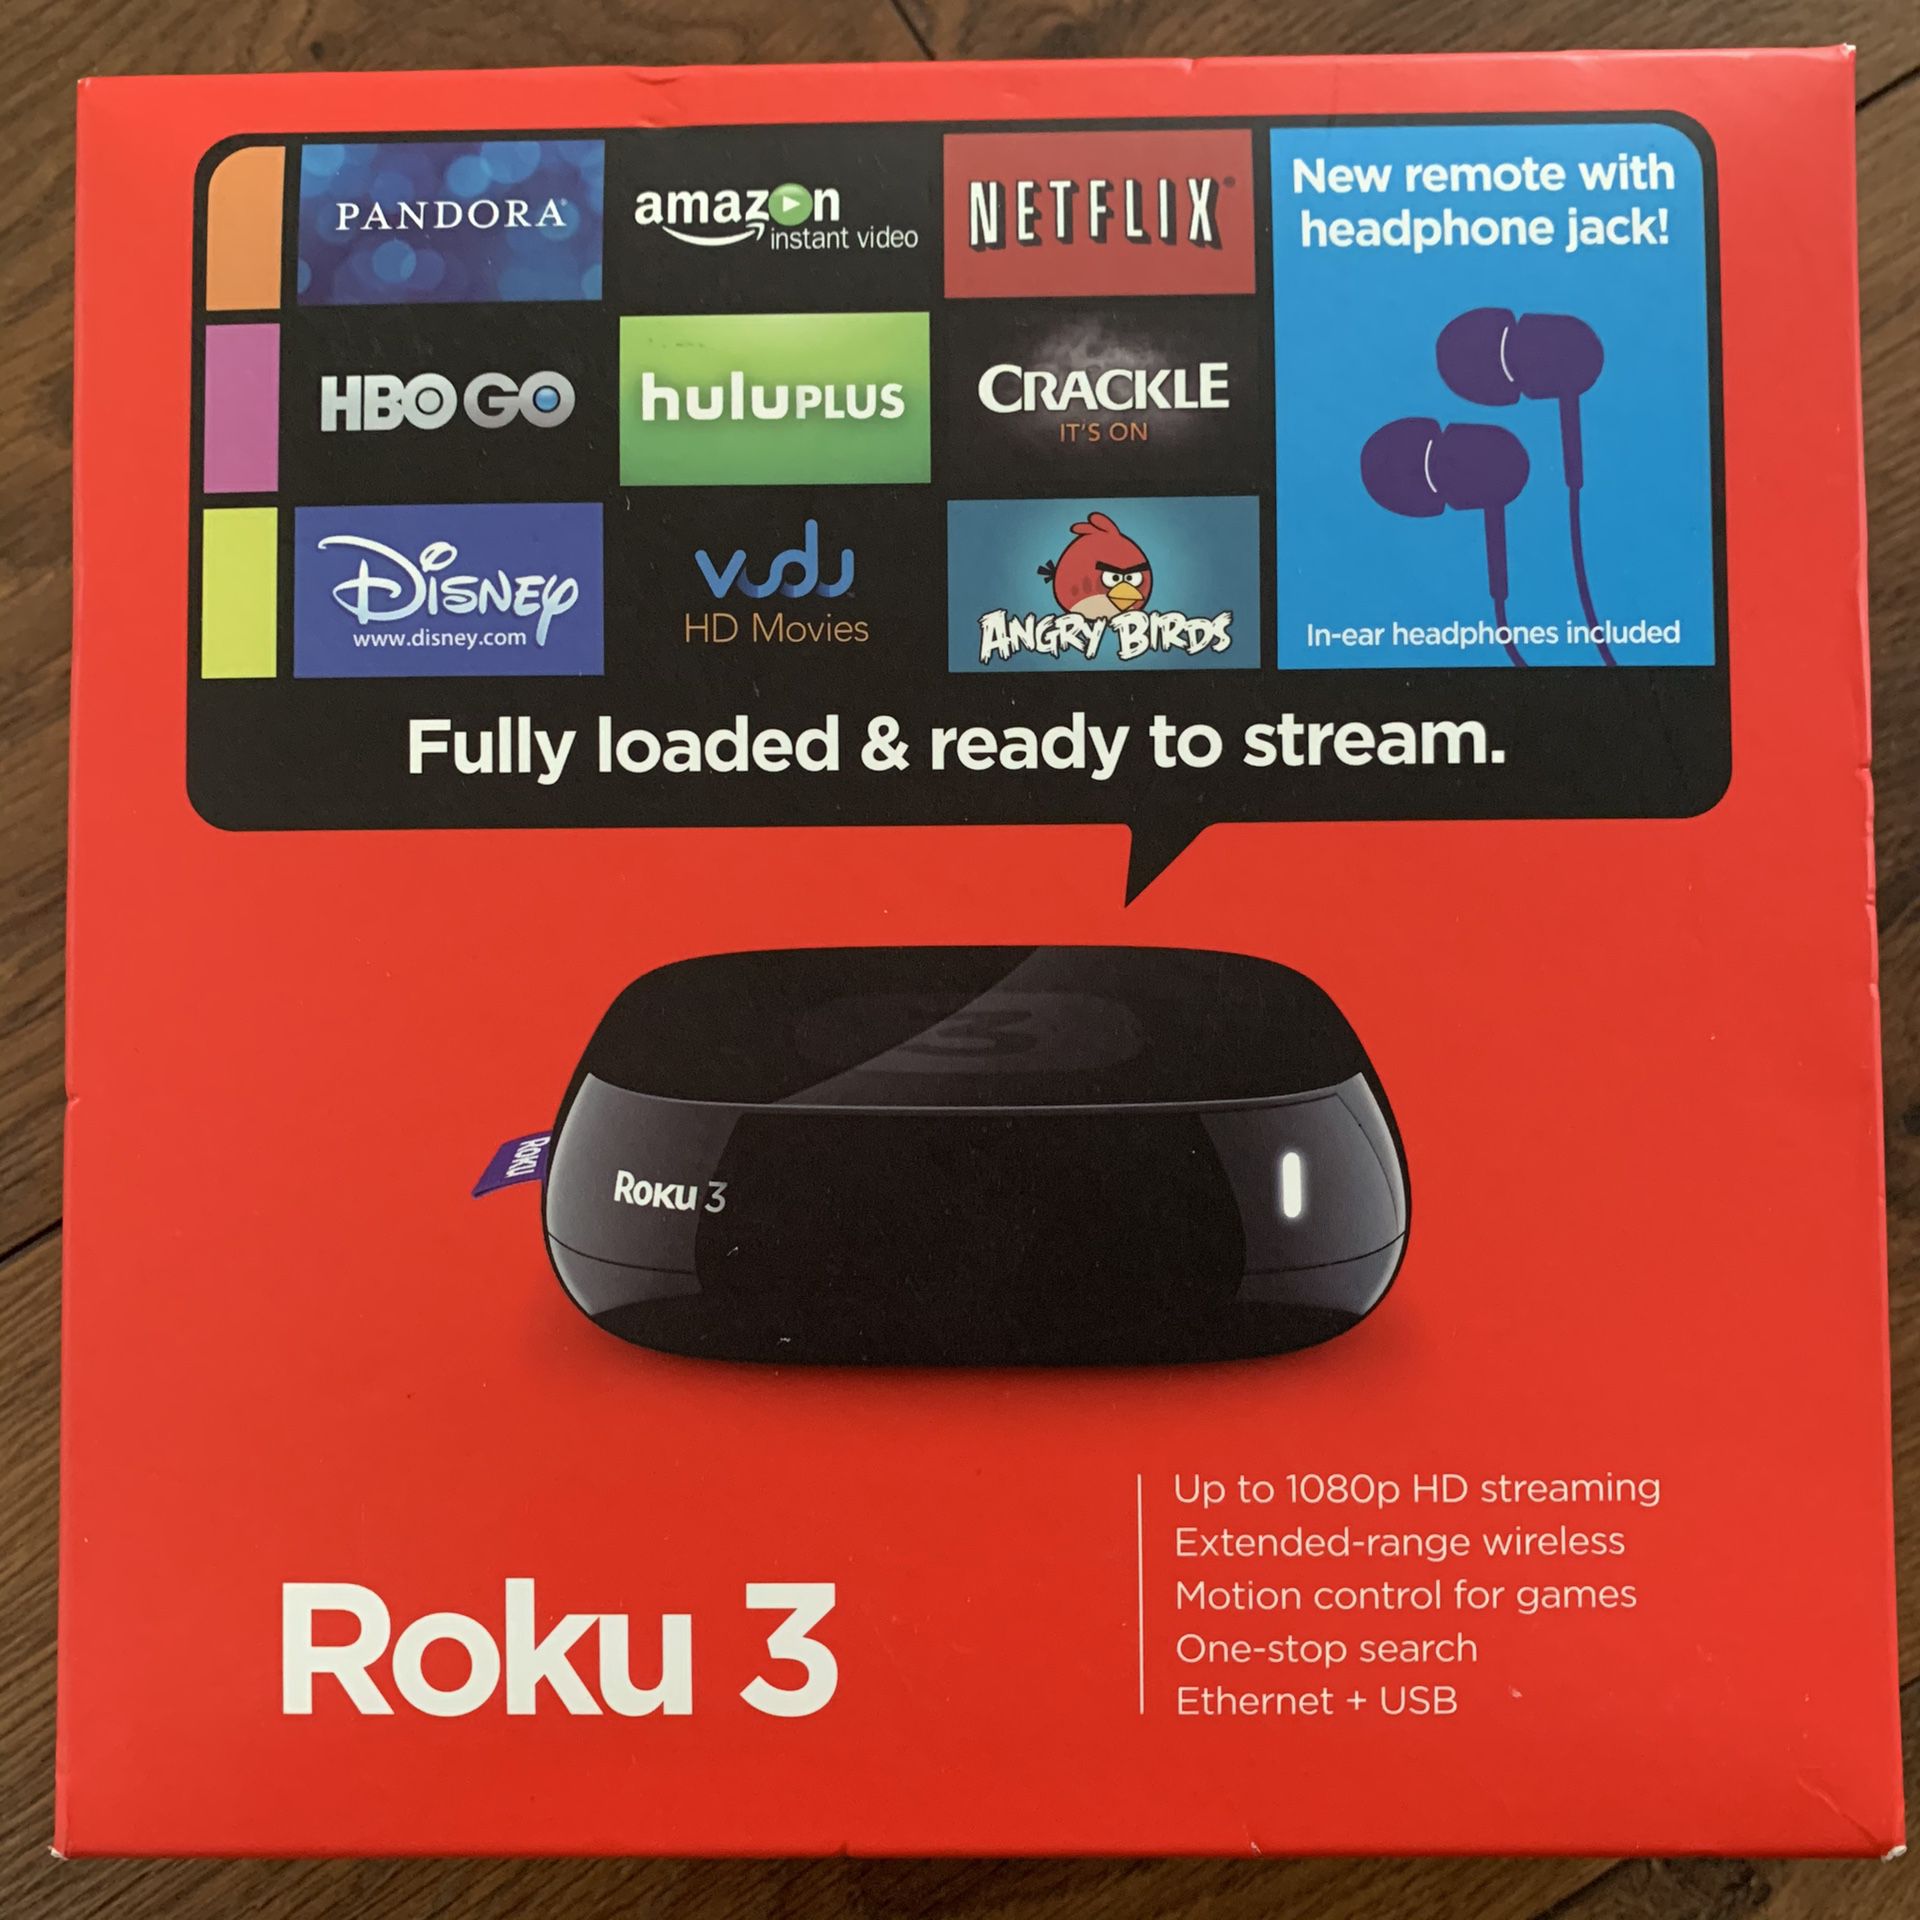 Roku 3 - like new with box